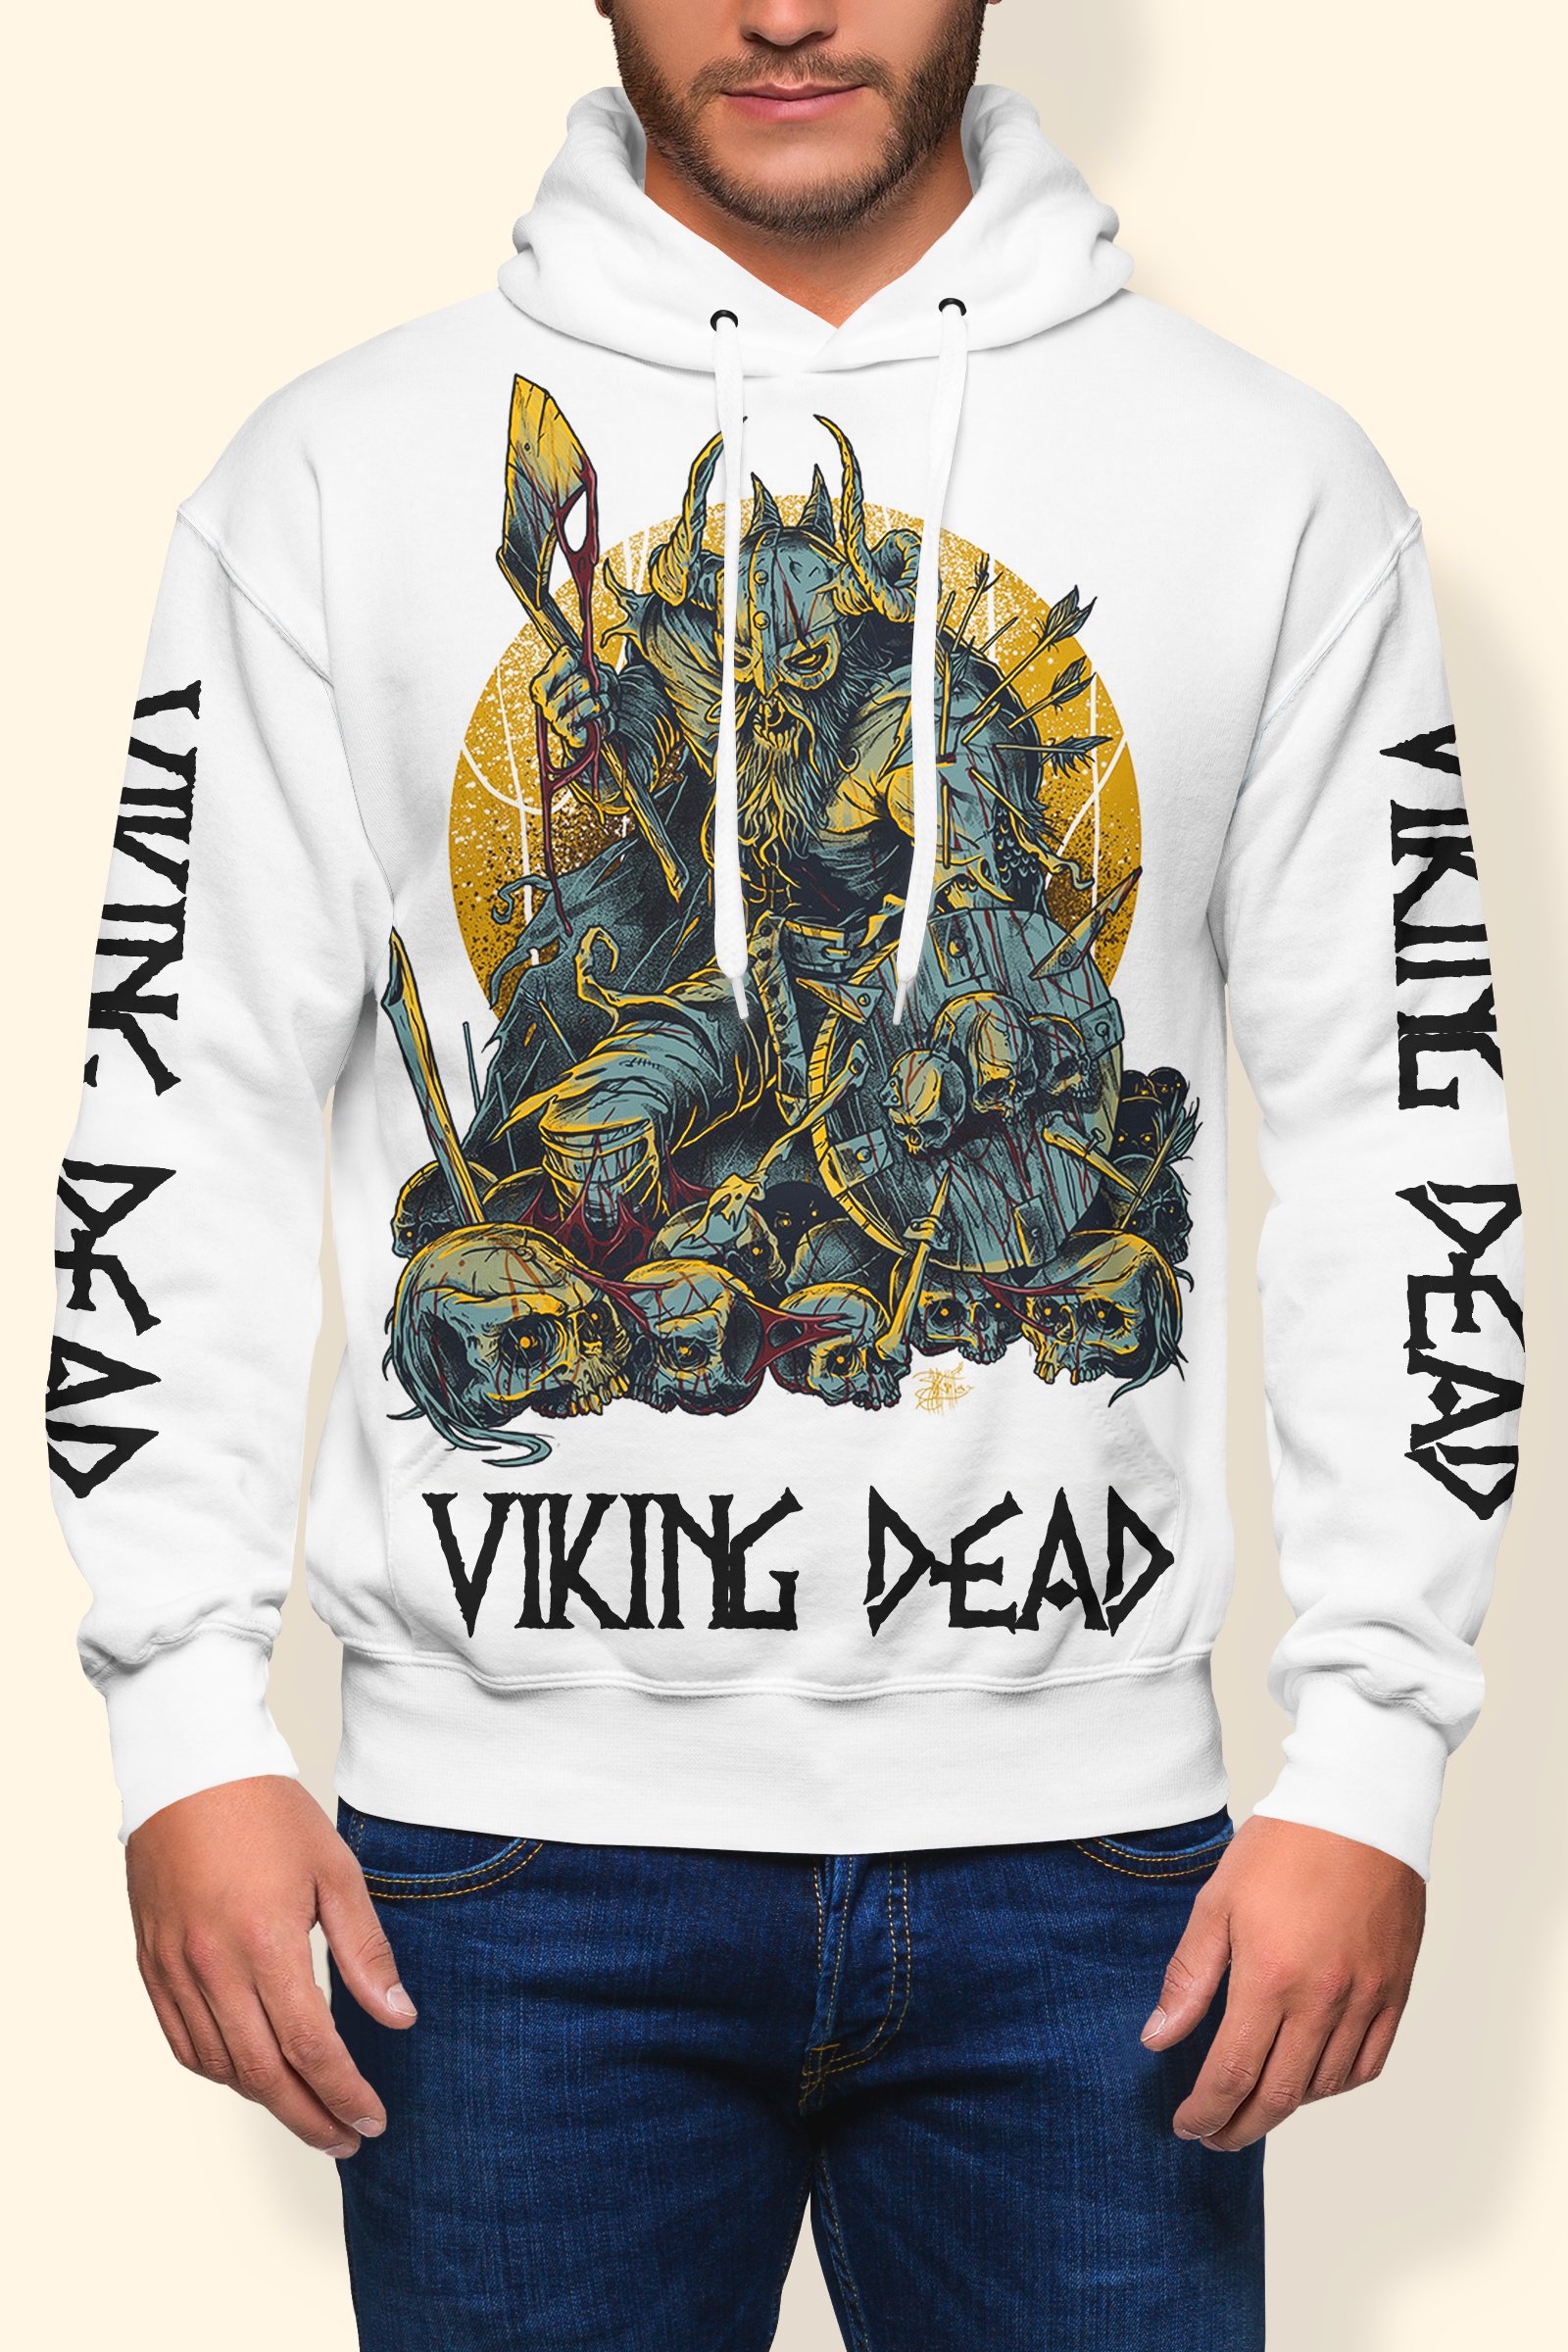 The viking dead full over printed hoodie